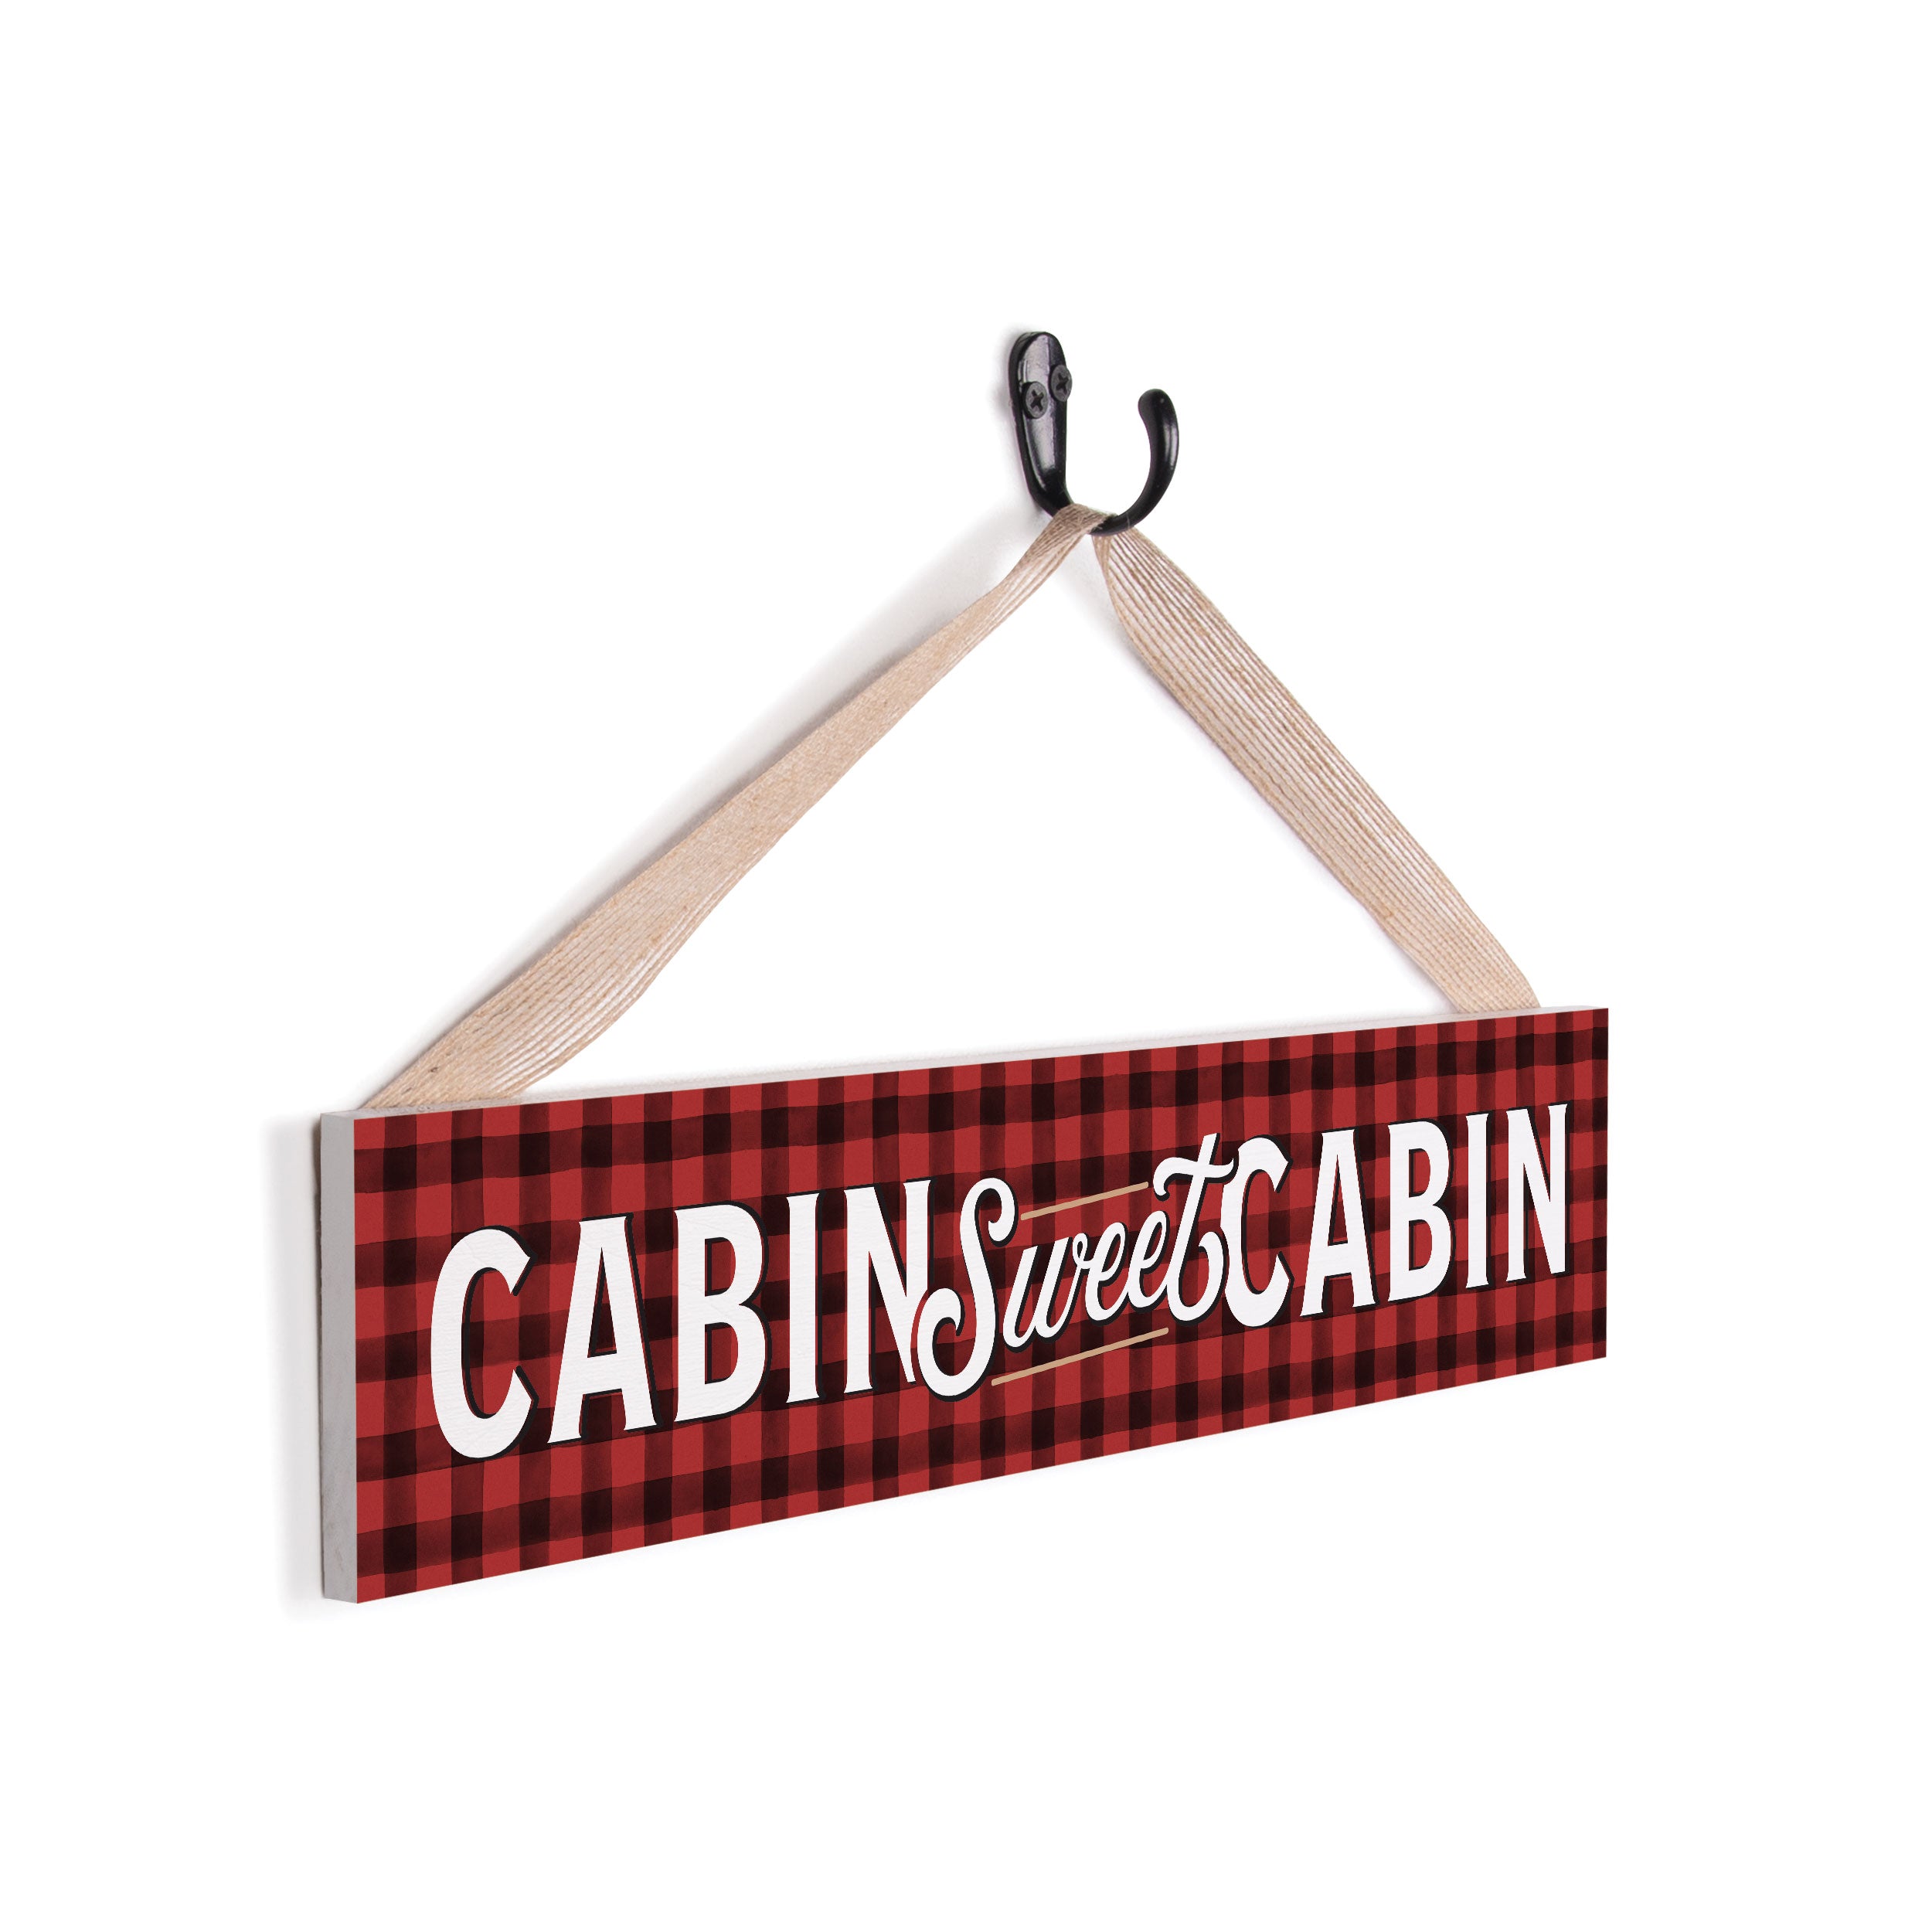 Cabin Sweet Cabin Outdoor Hanging Sign